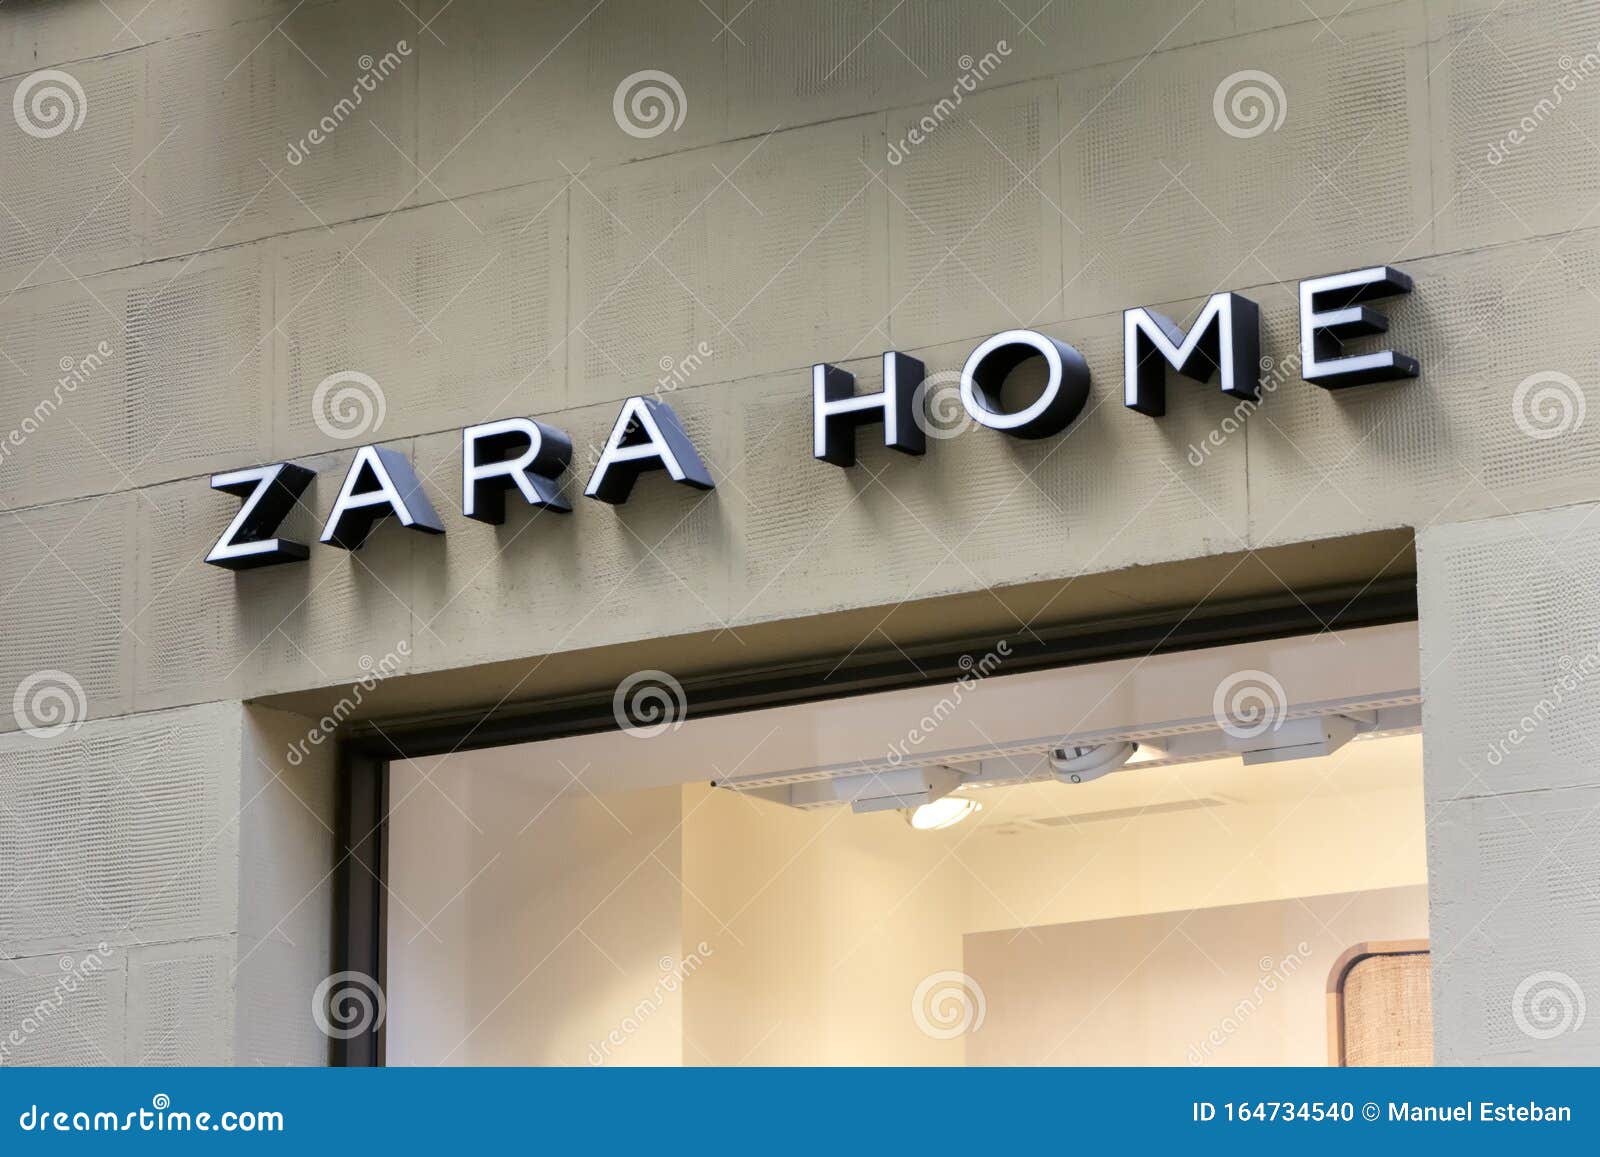 Магазин Zara Home Каталог